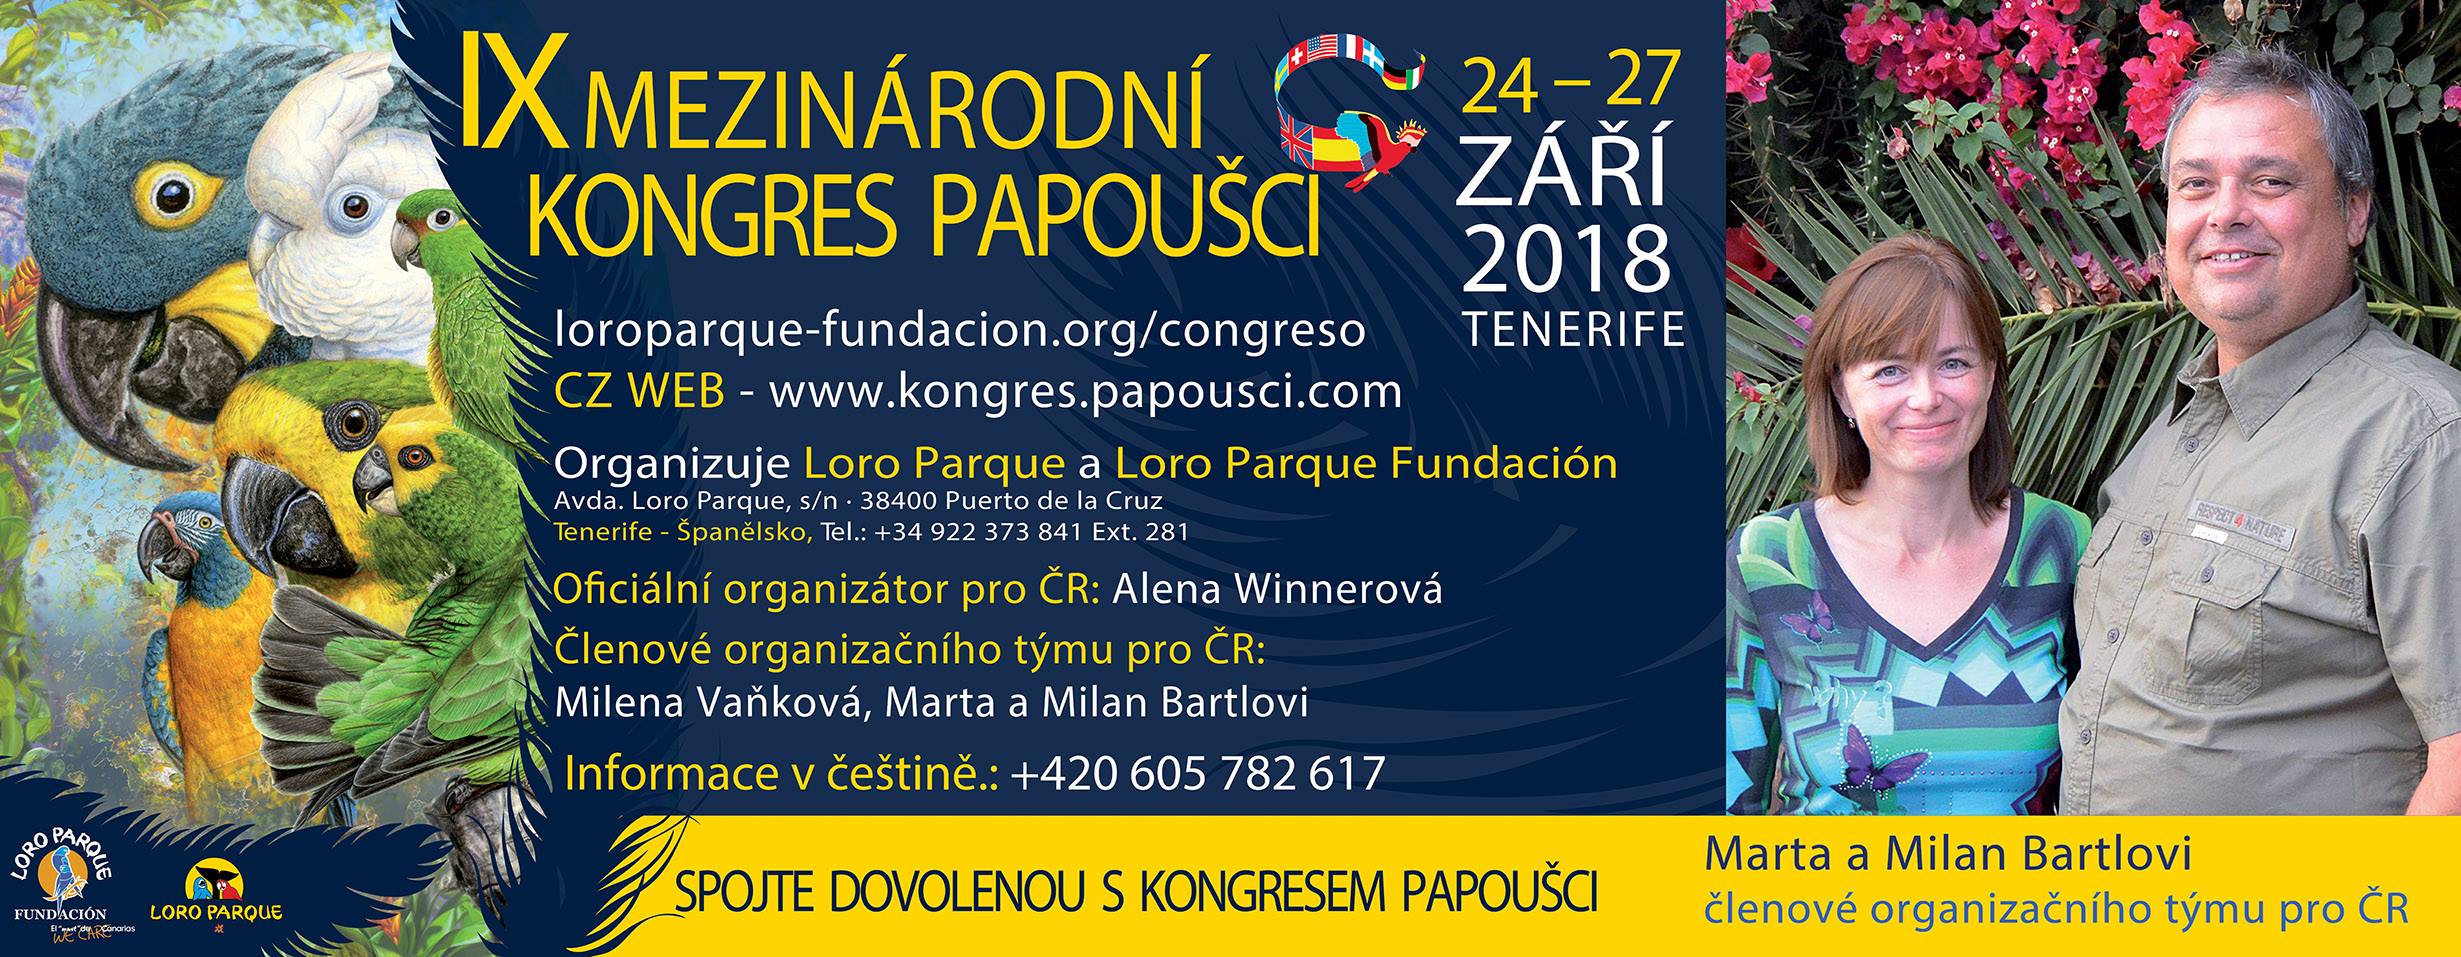 Mezinárodní kongres Papoušci 2018, Loro Parque, Tenerife, 24. 9. - 27. 9. 2018